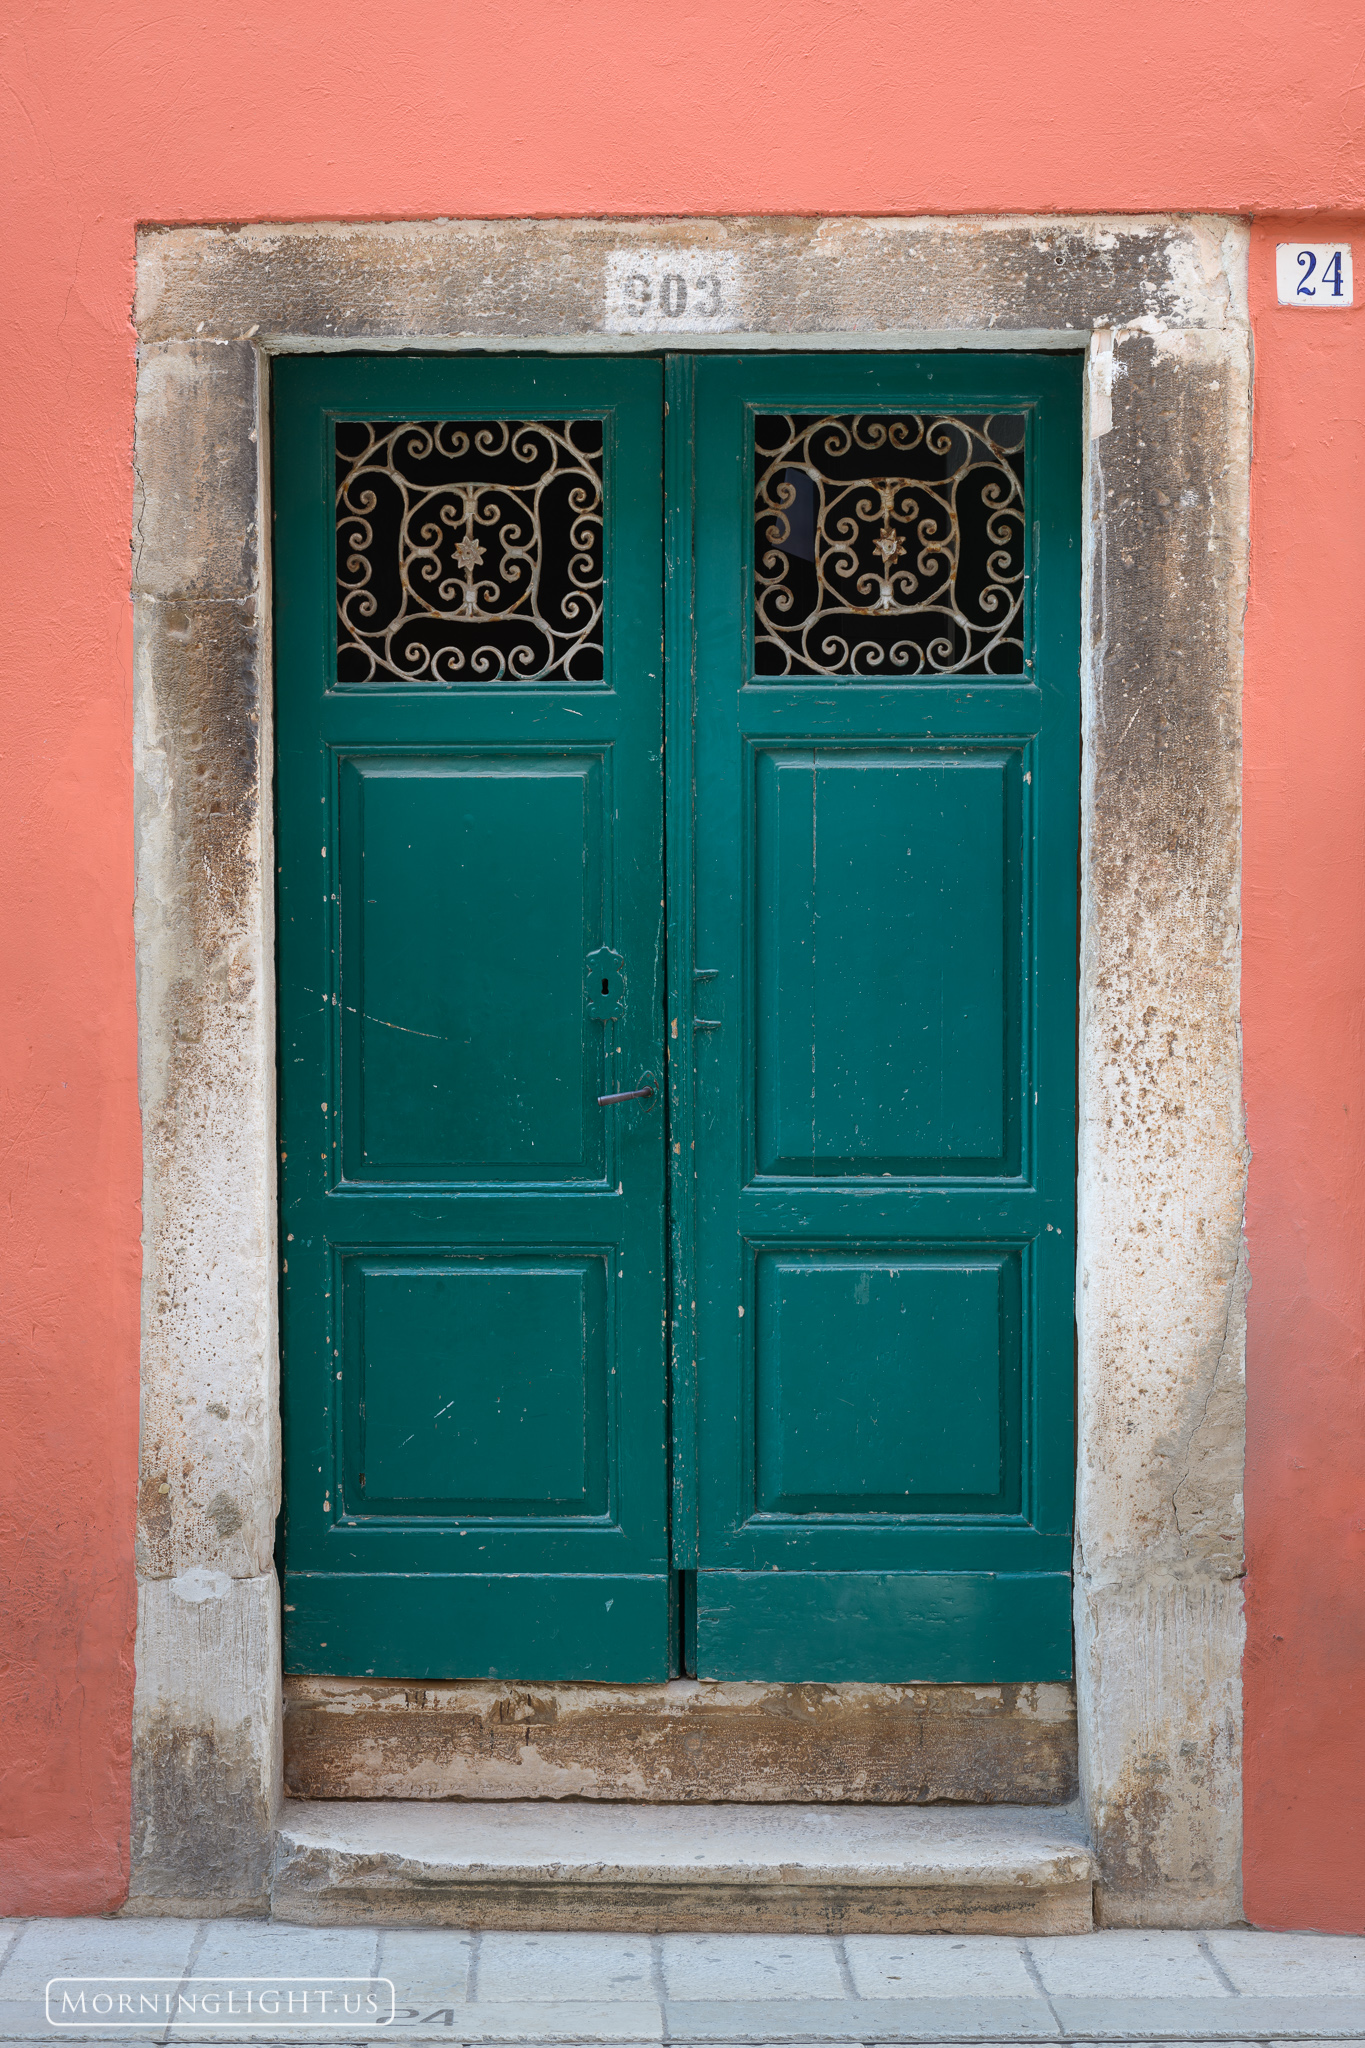 One of the many fascinating doors in Rovijn, Croatia.